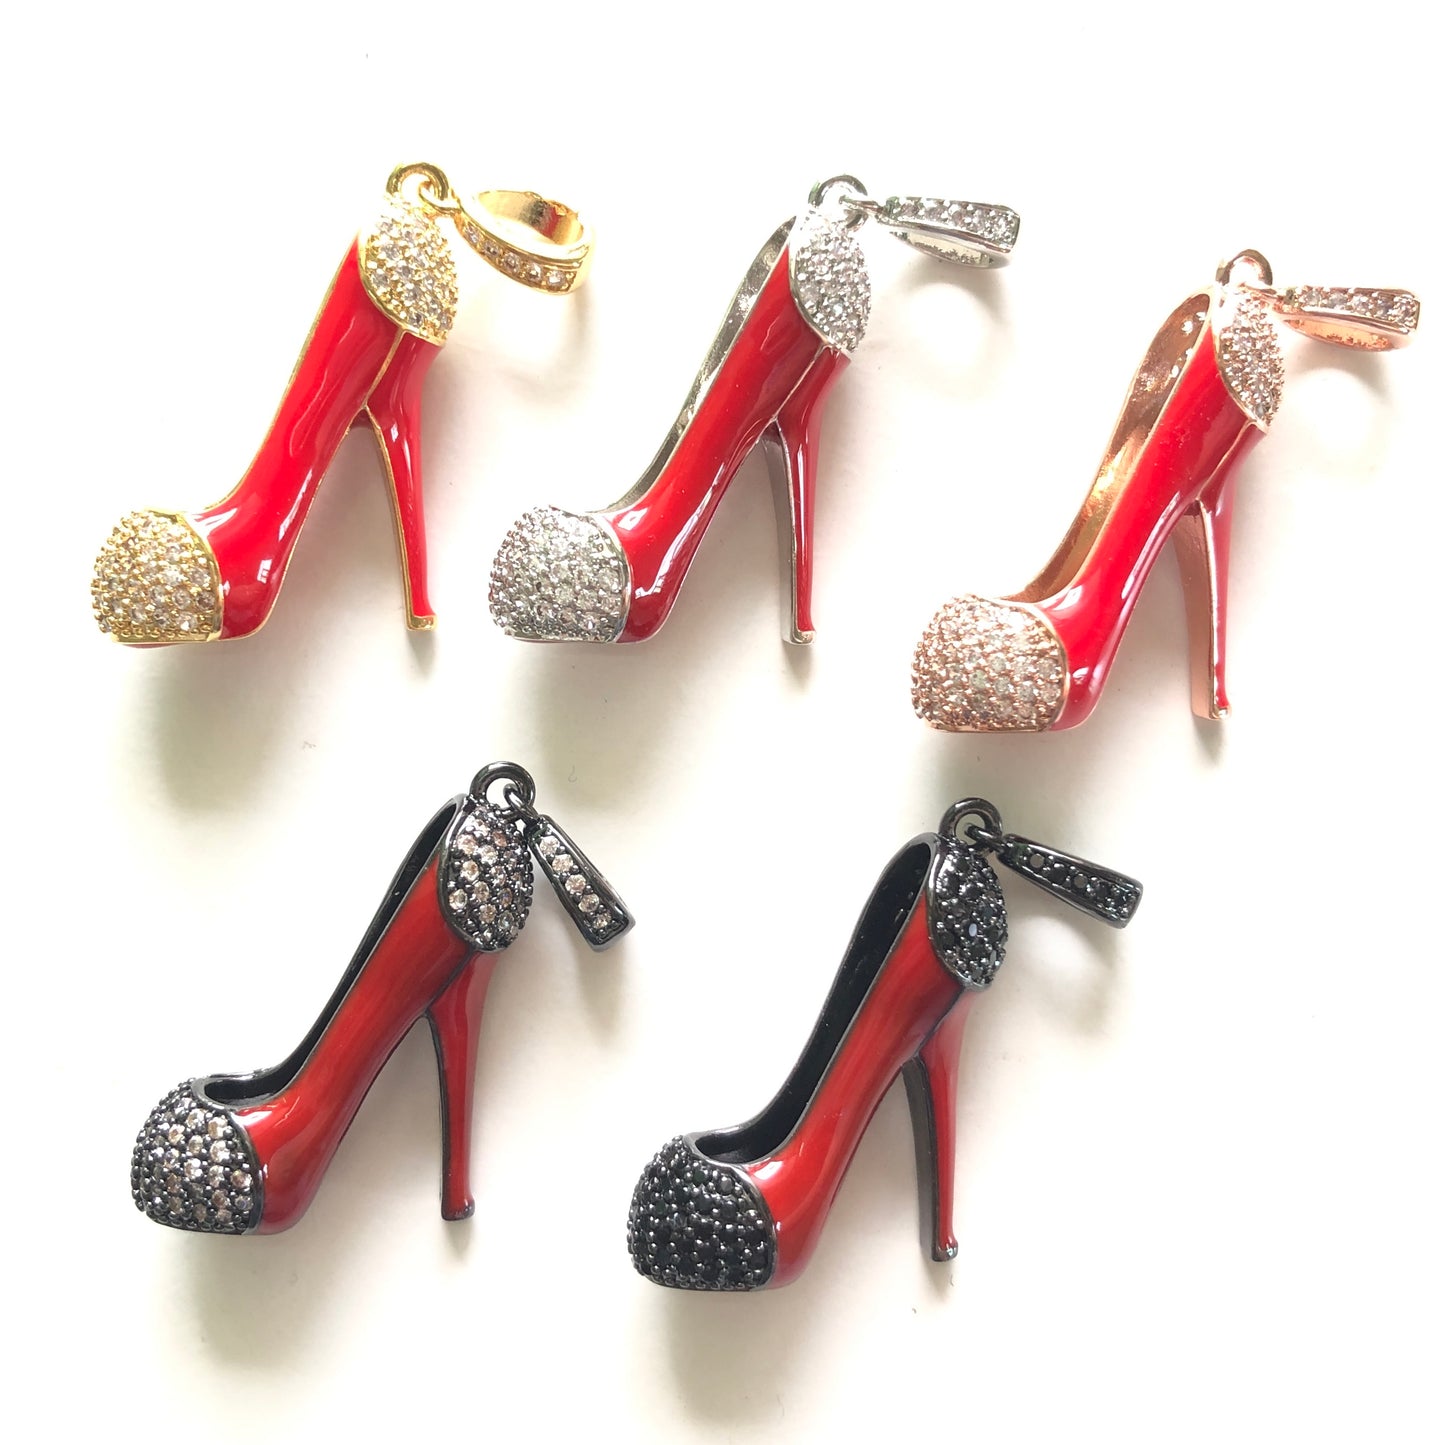 10pcs/lot 30*26mm CZ Paved Red High Heel Shoe Charms CZ Paved Charms High Heels On Sale Charms Beads Beyond